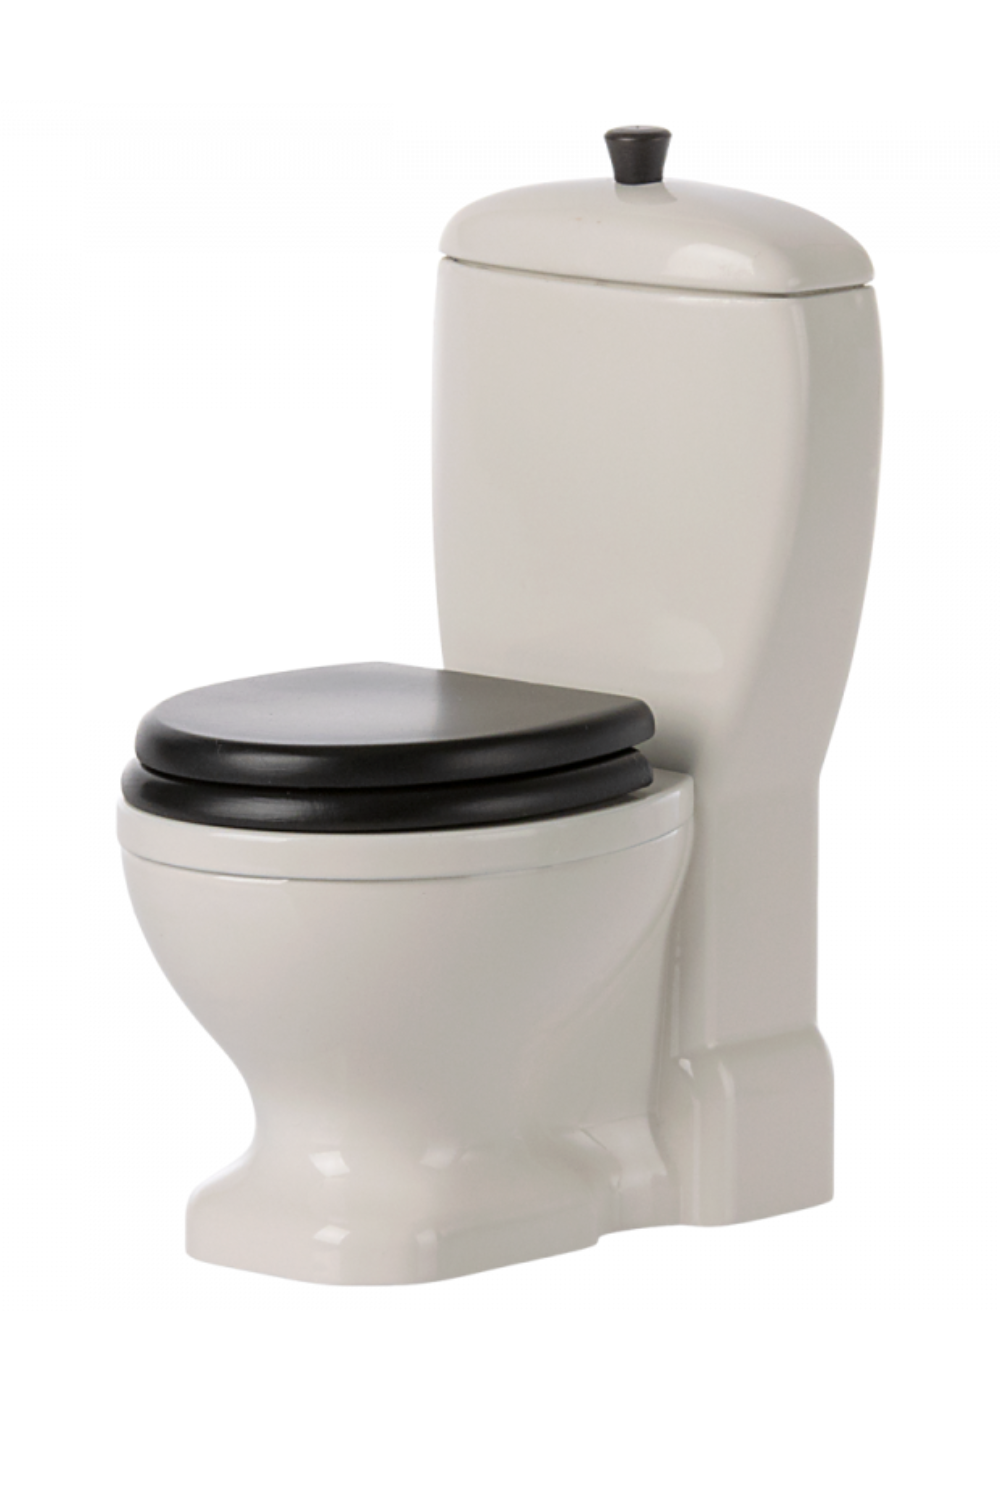 Maileg Toilet, Miniature Size (larger)